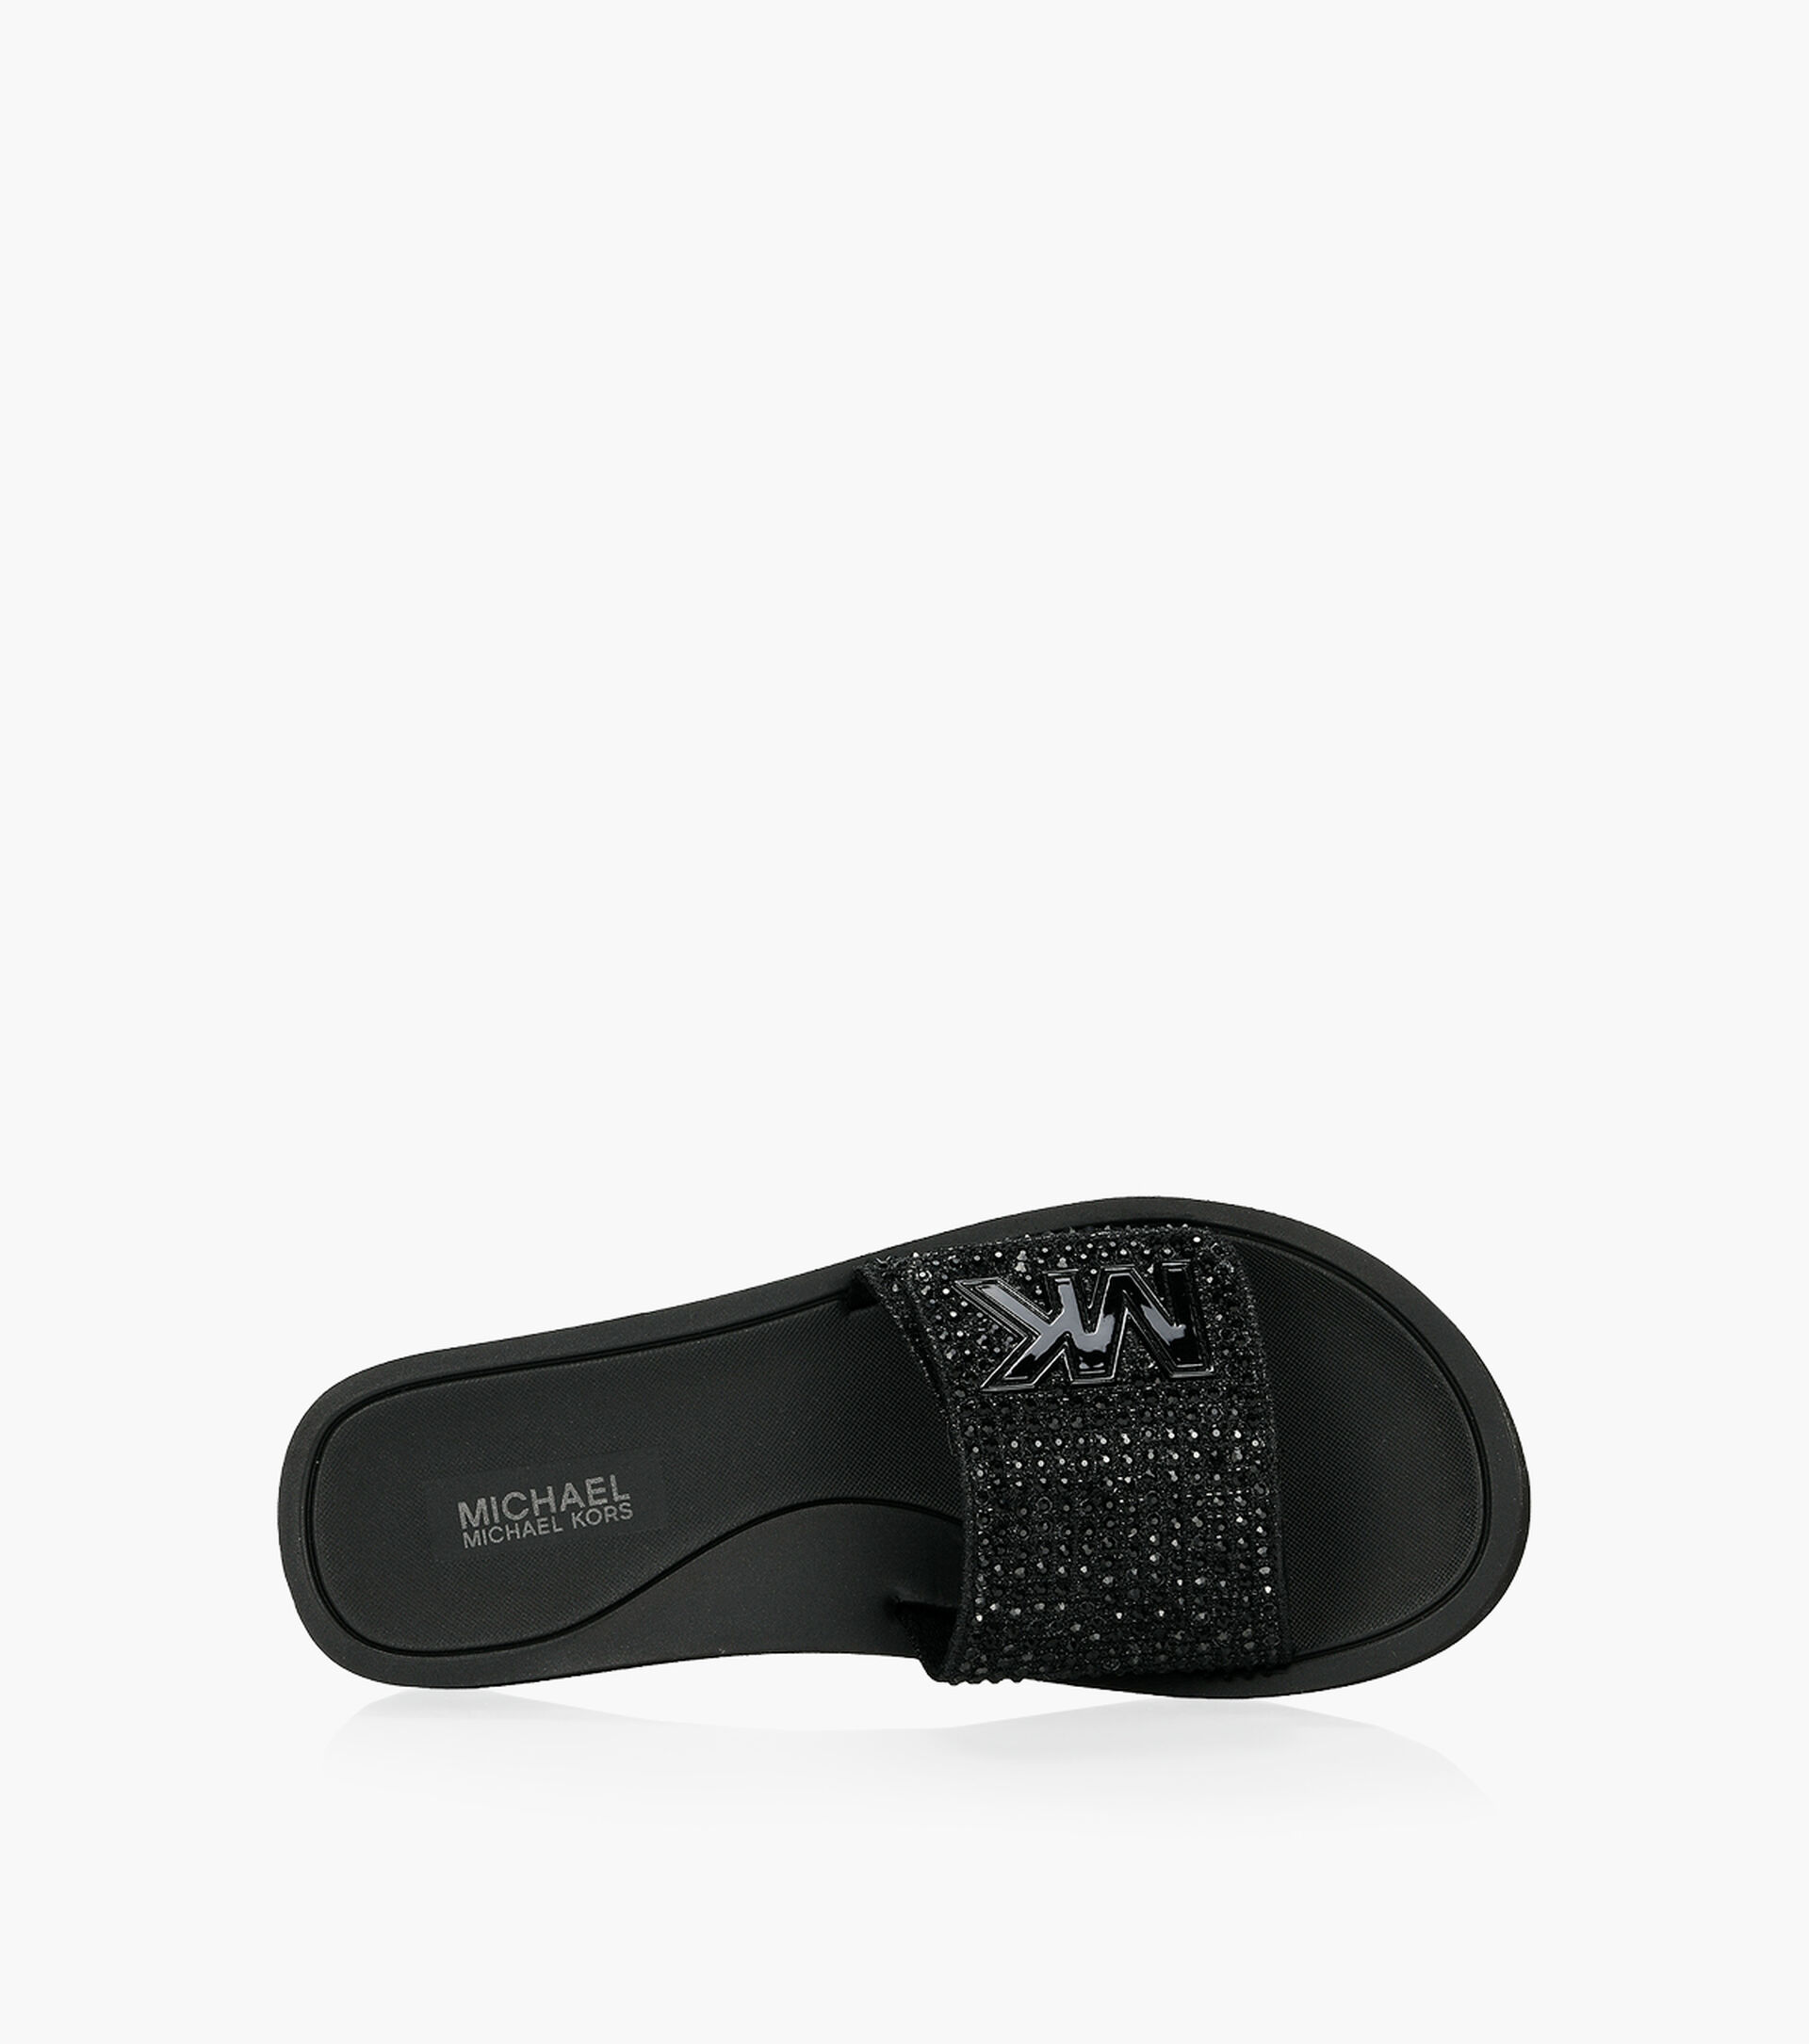 MICHAEL MICHAEL KORS MK PLATFORM SLIDE - Synthetic | Browns Shoes